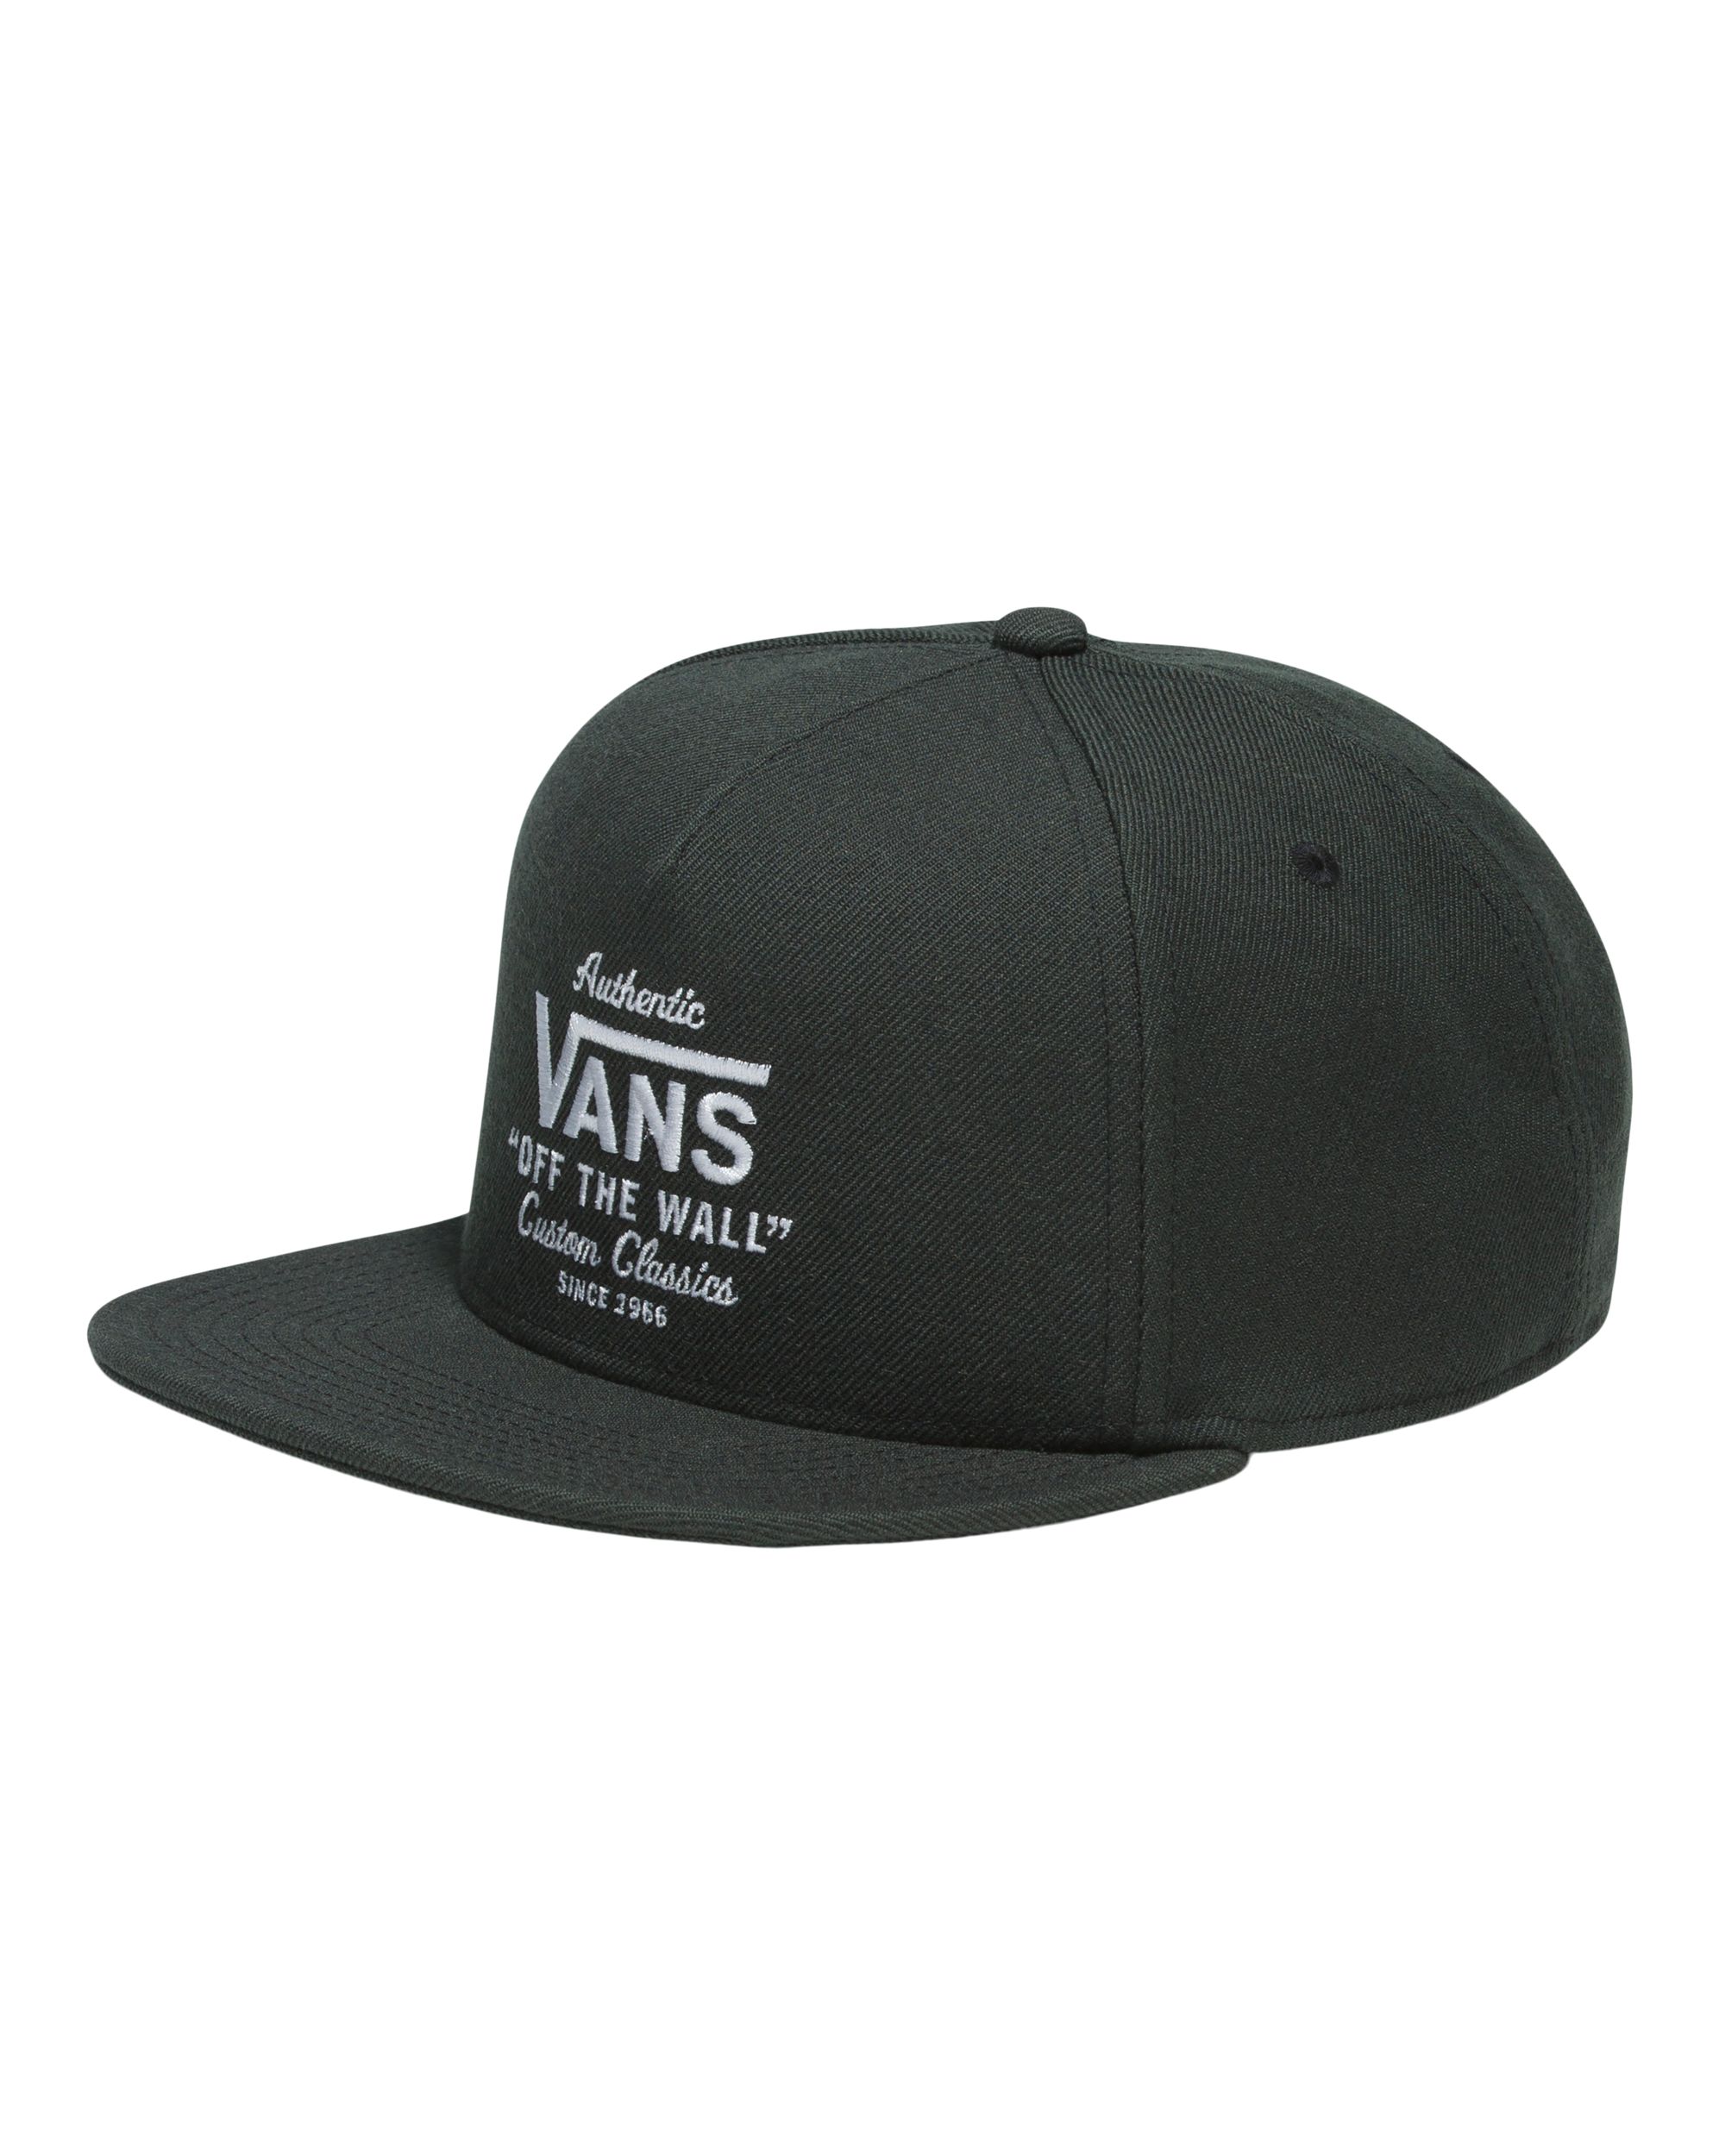 Image of Vans Men's Authentic Snapback Hat